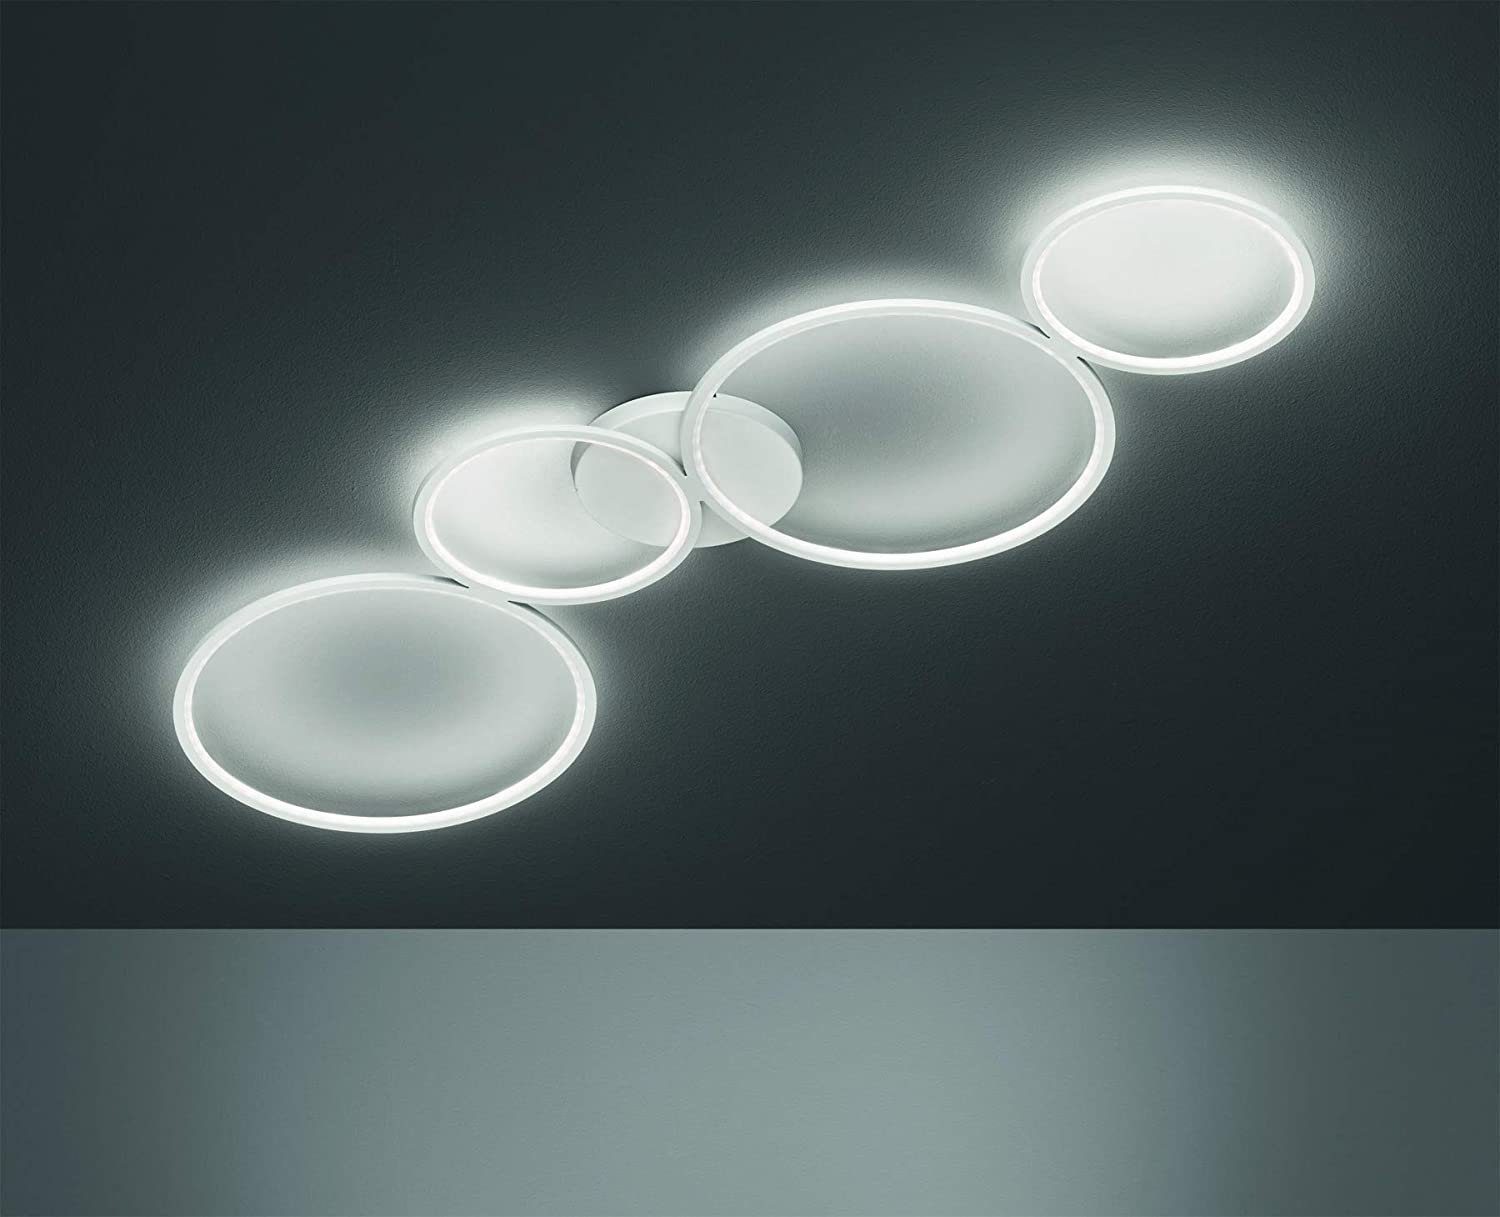 lightling LED Deckenlampe LED Sina Ringe, LED Deckenleuchte 4 weiss fest integriert, Warmweiß